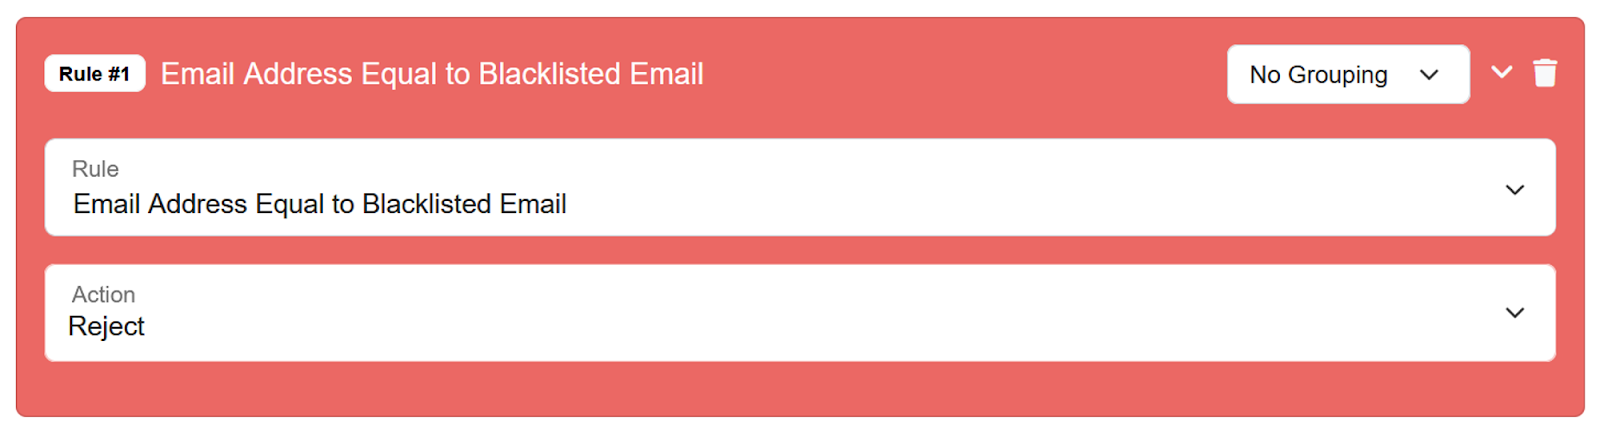 Blacklisted Email Address Validation